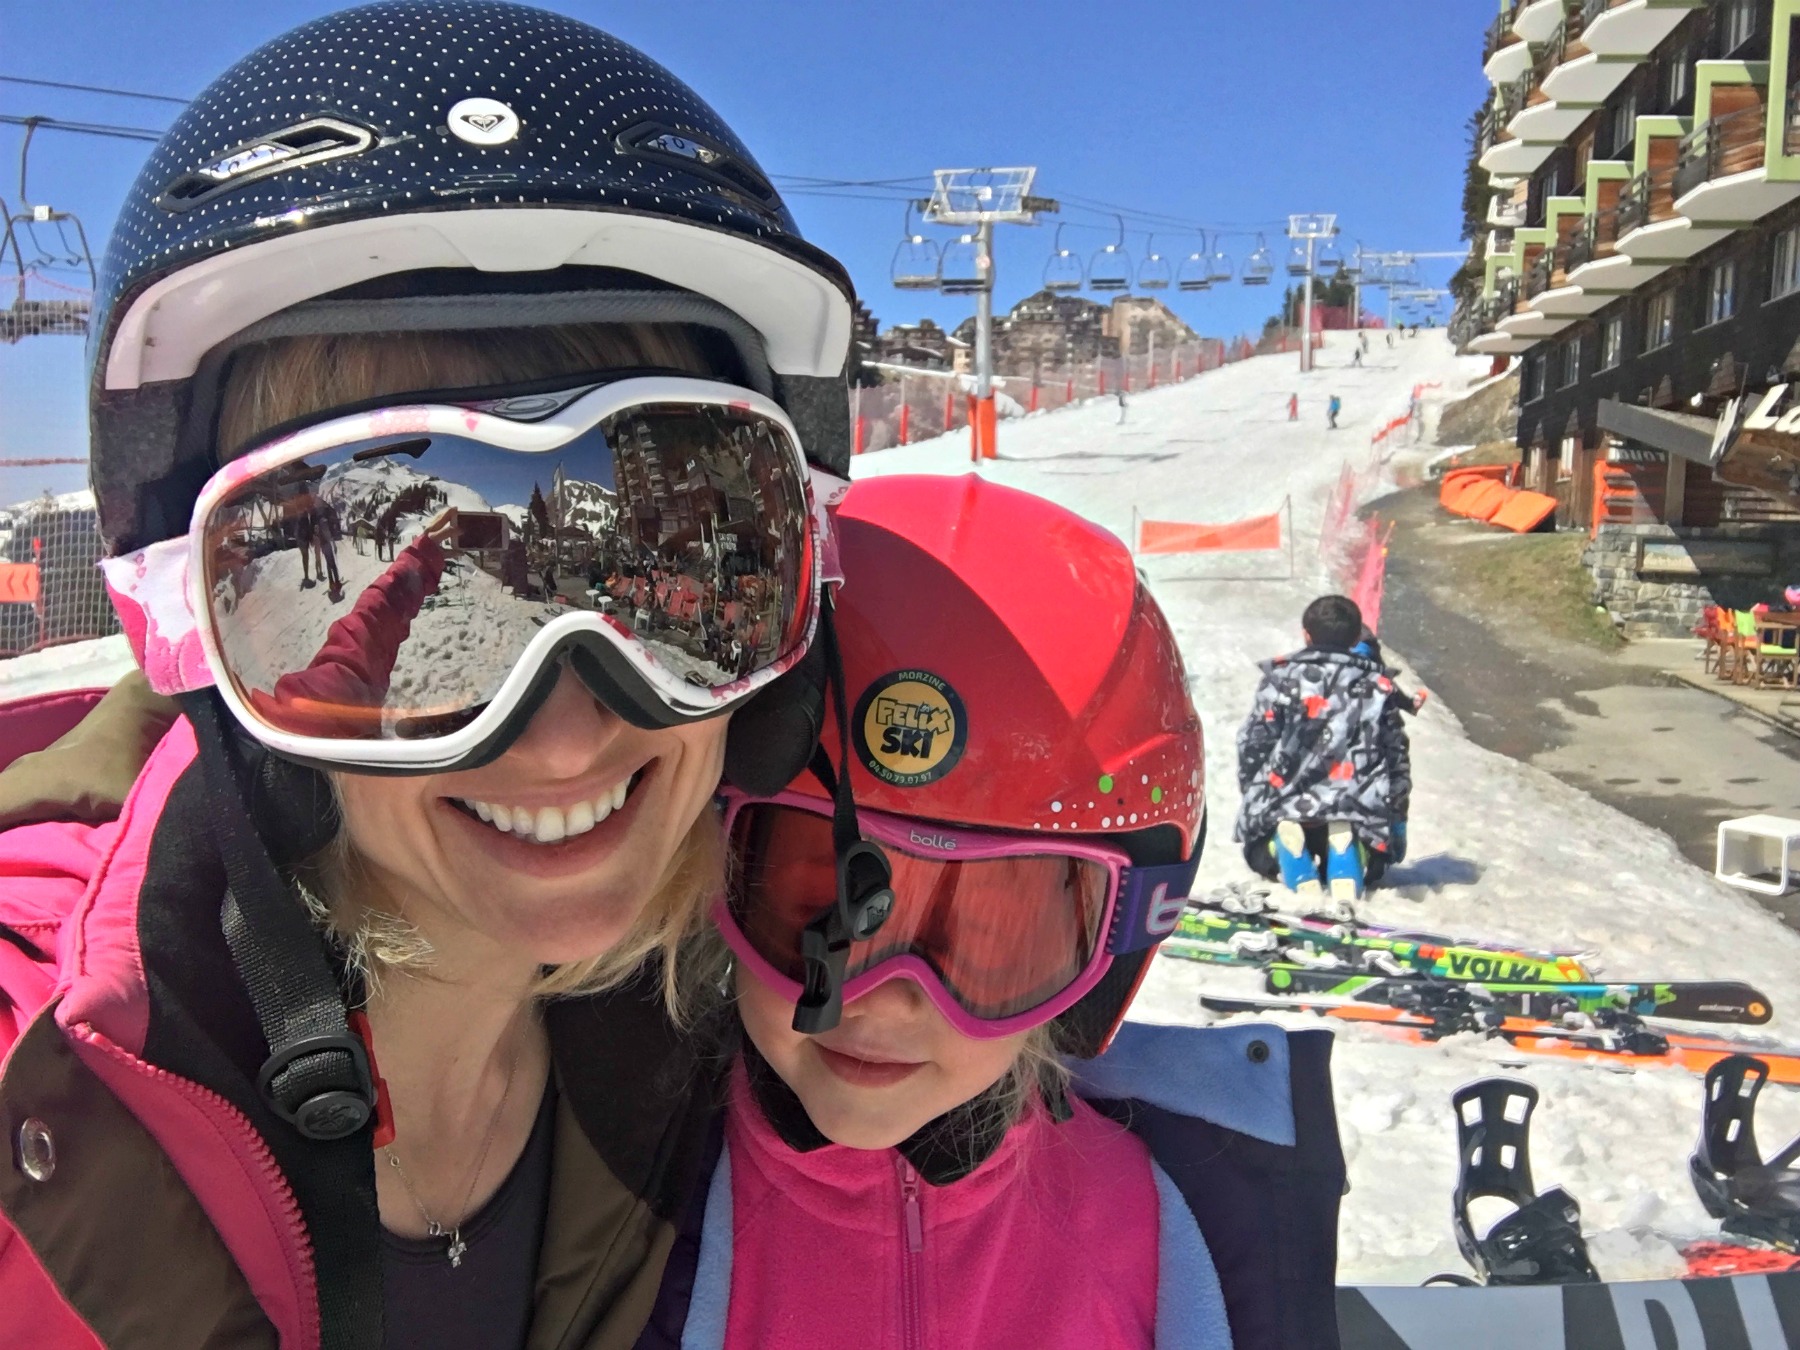 Family Ski holiday